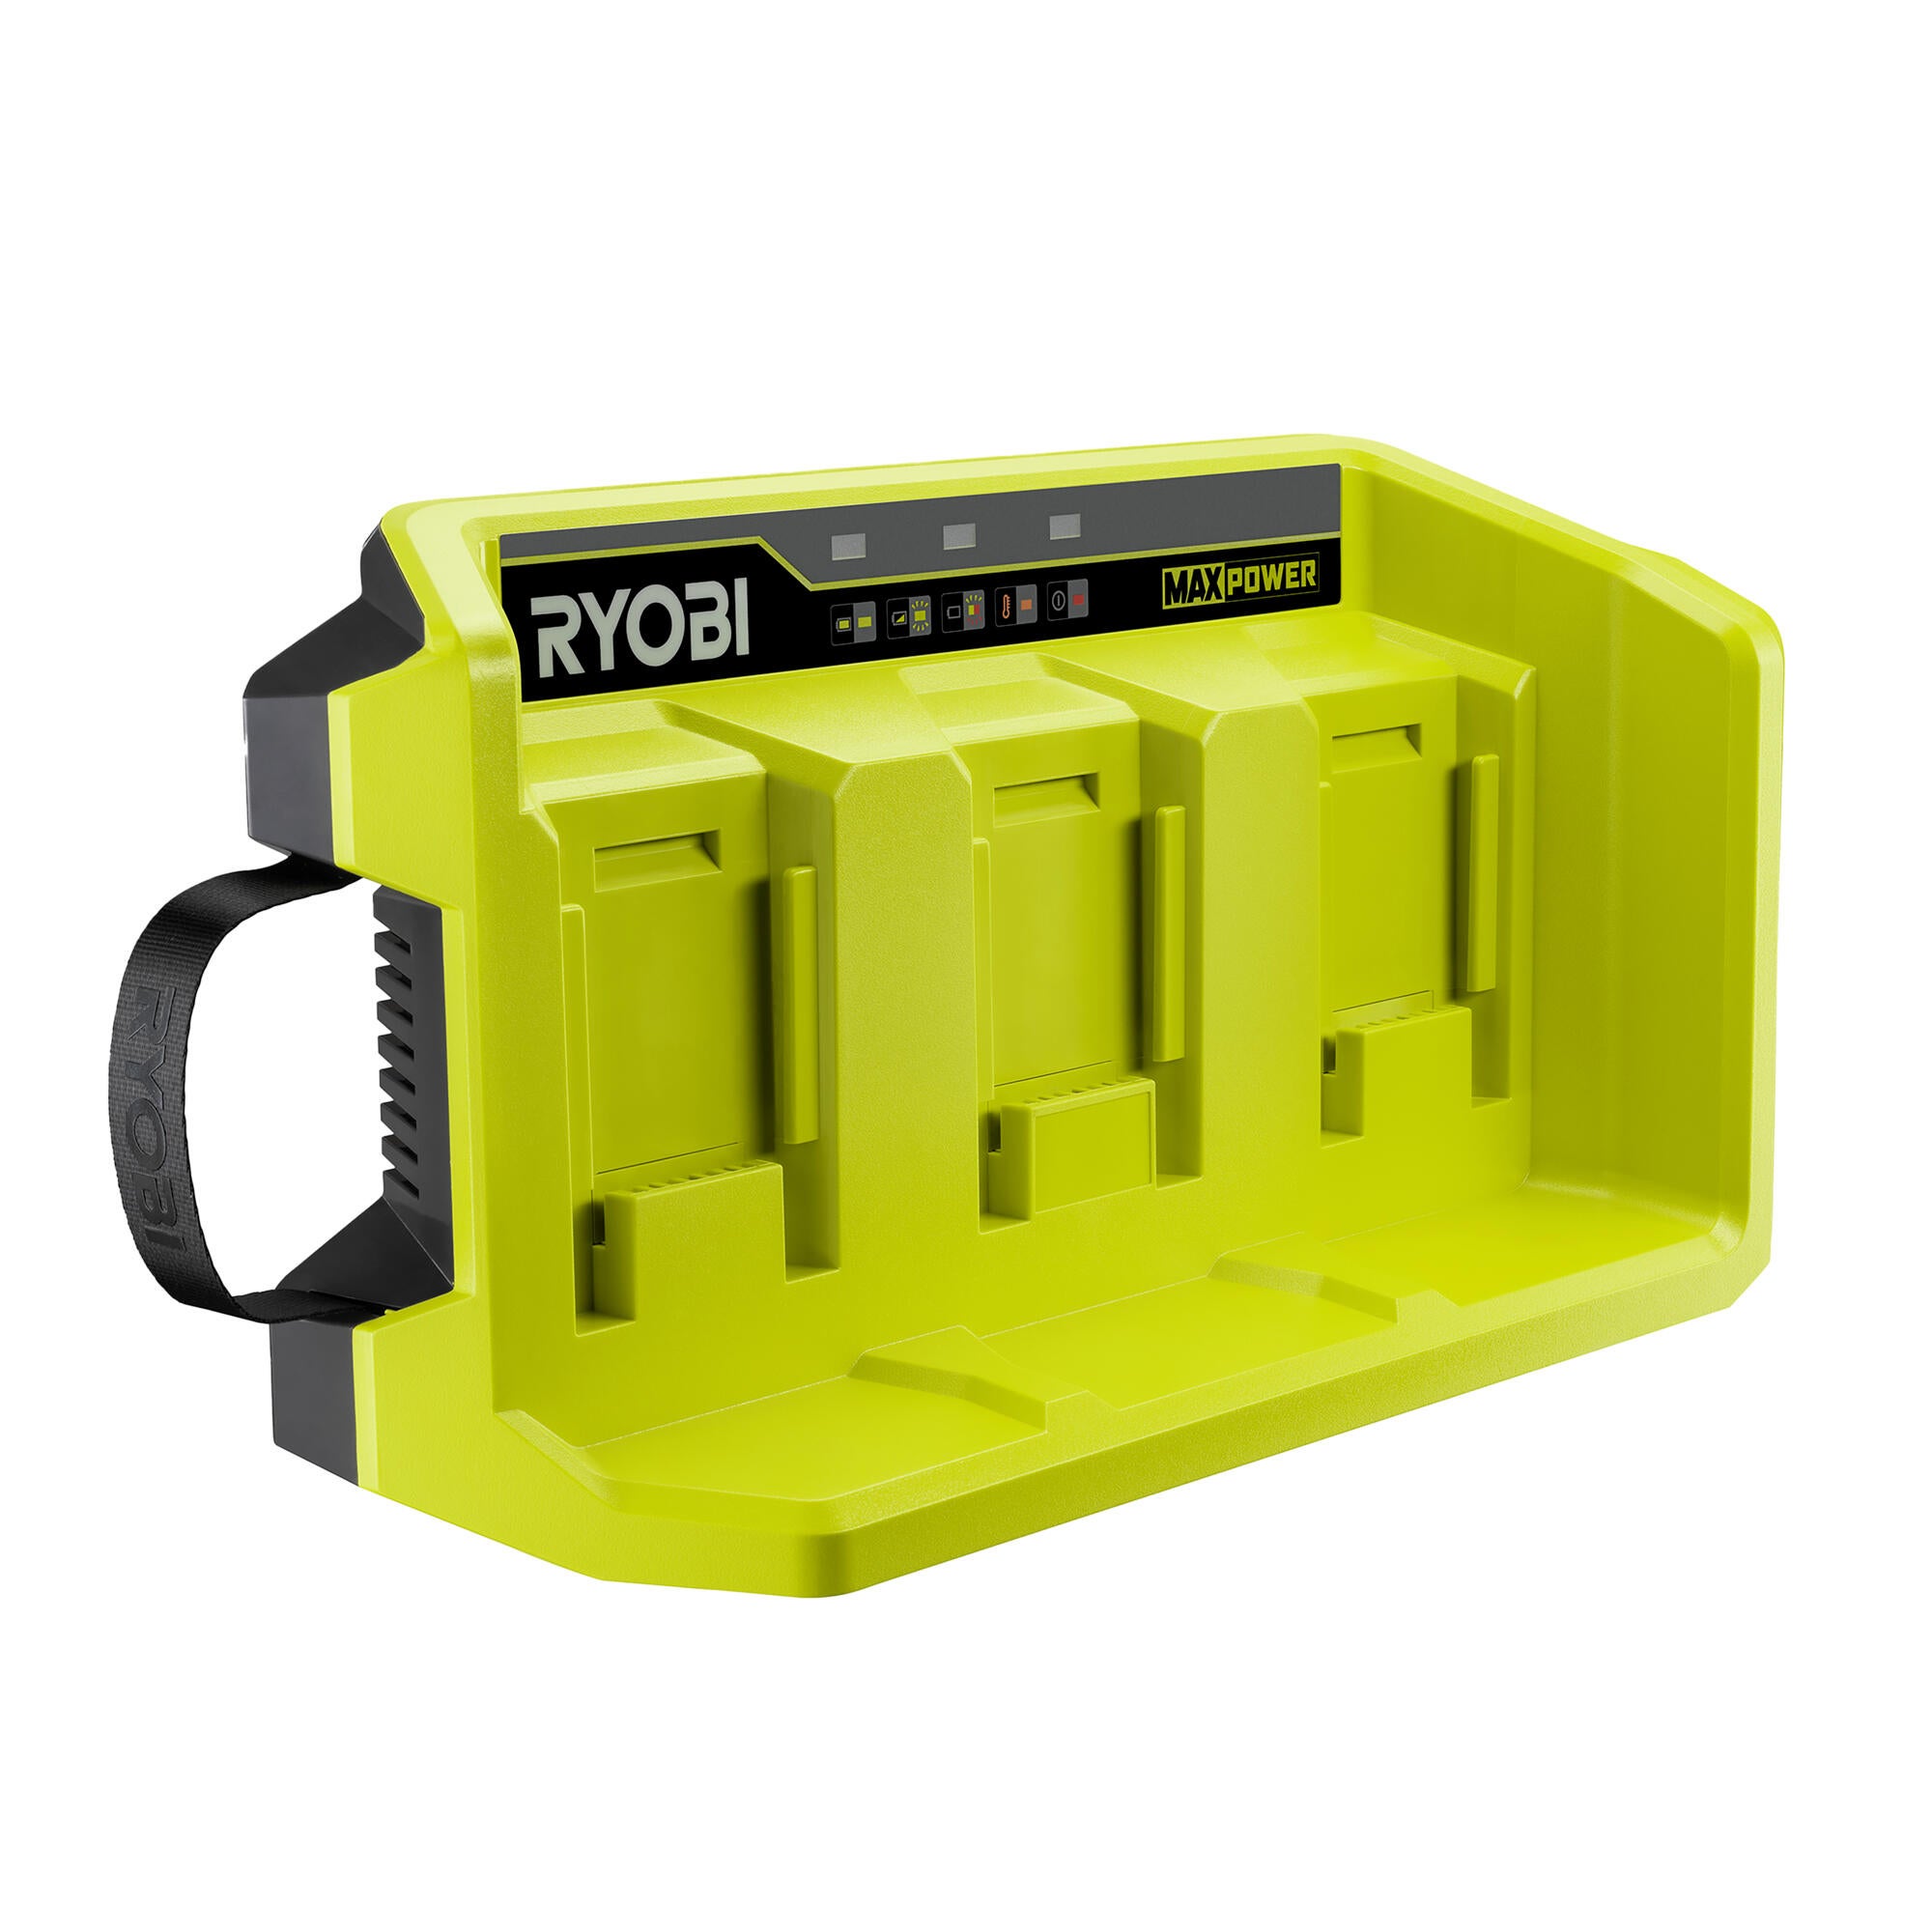 Cargador para 3 baterías ryobi 36v y 4a con indicador de carga y carga rápida